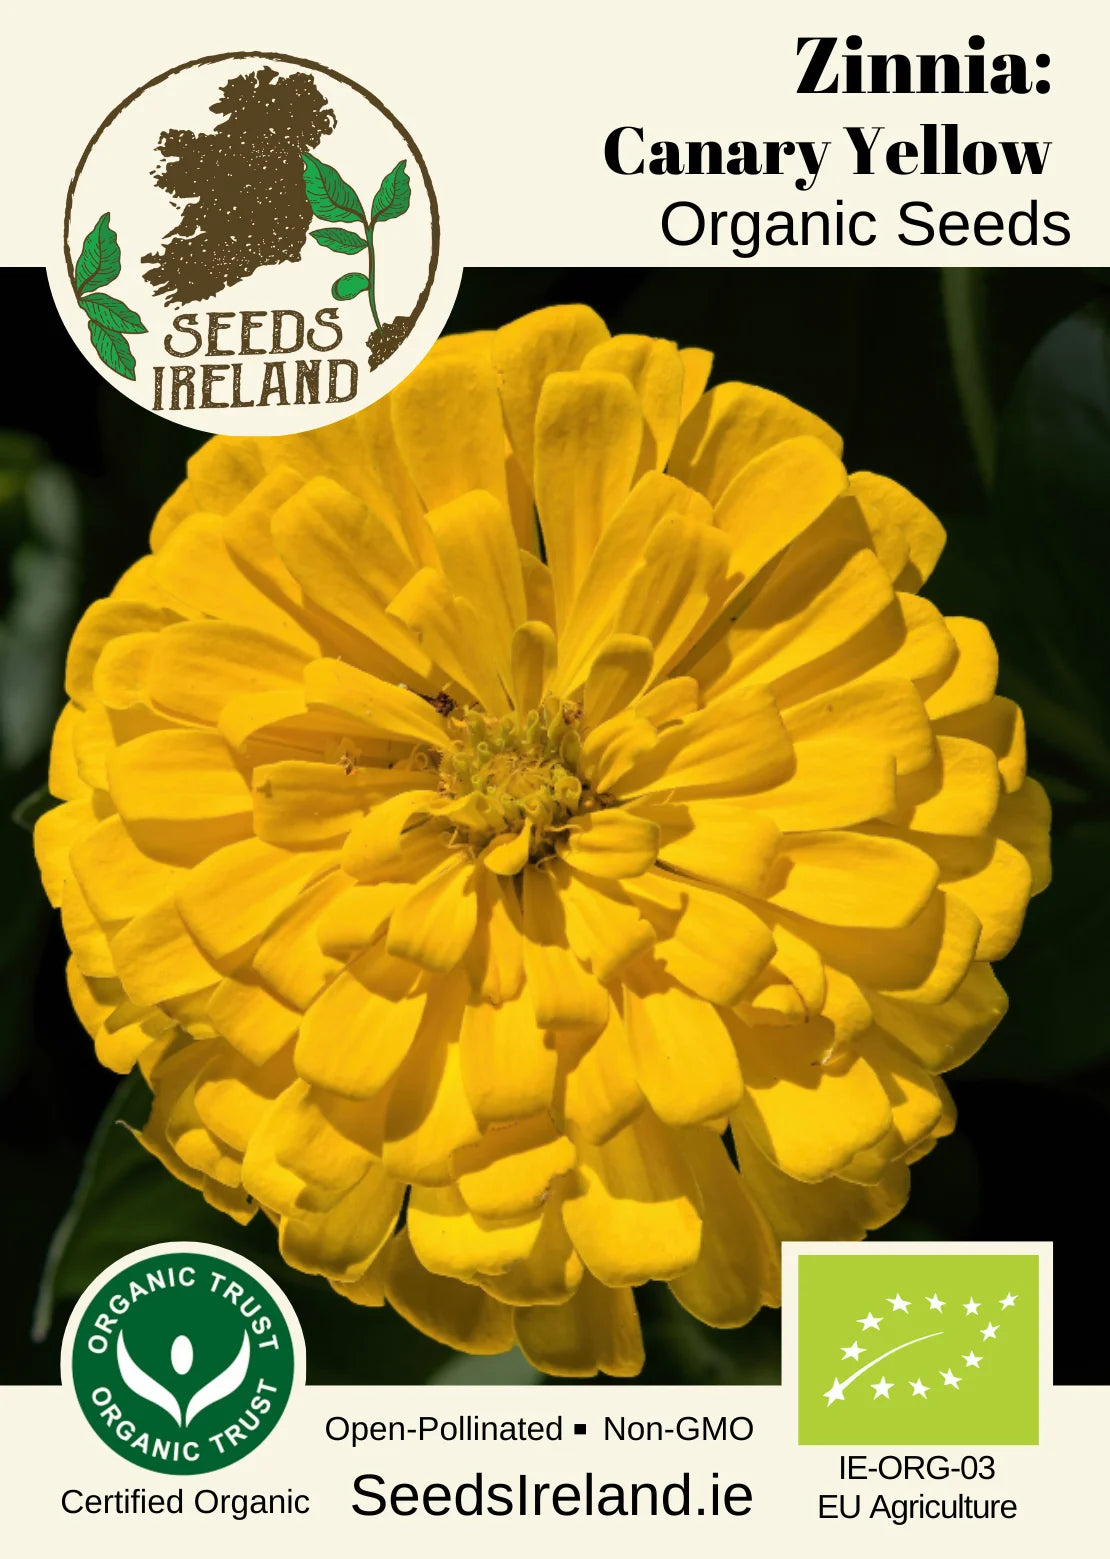 Zinnia: Canary Yellow Organic Seed